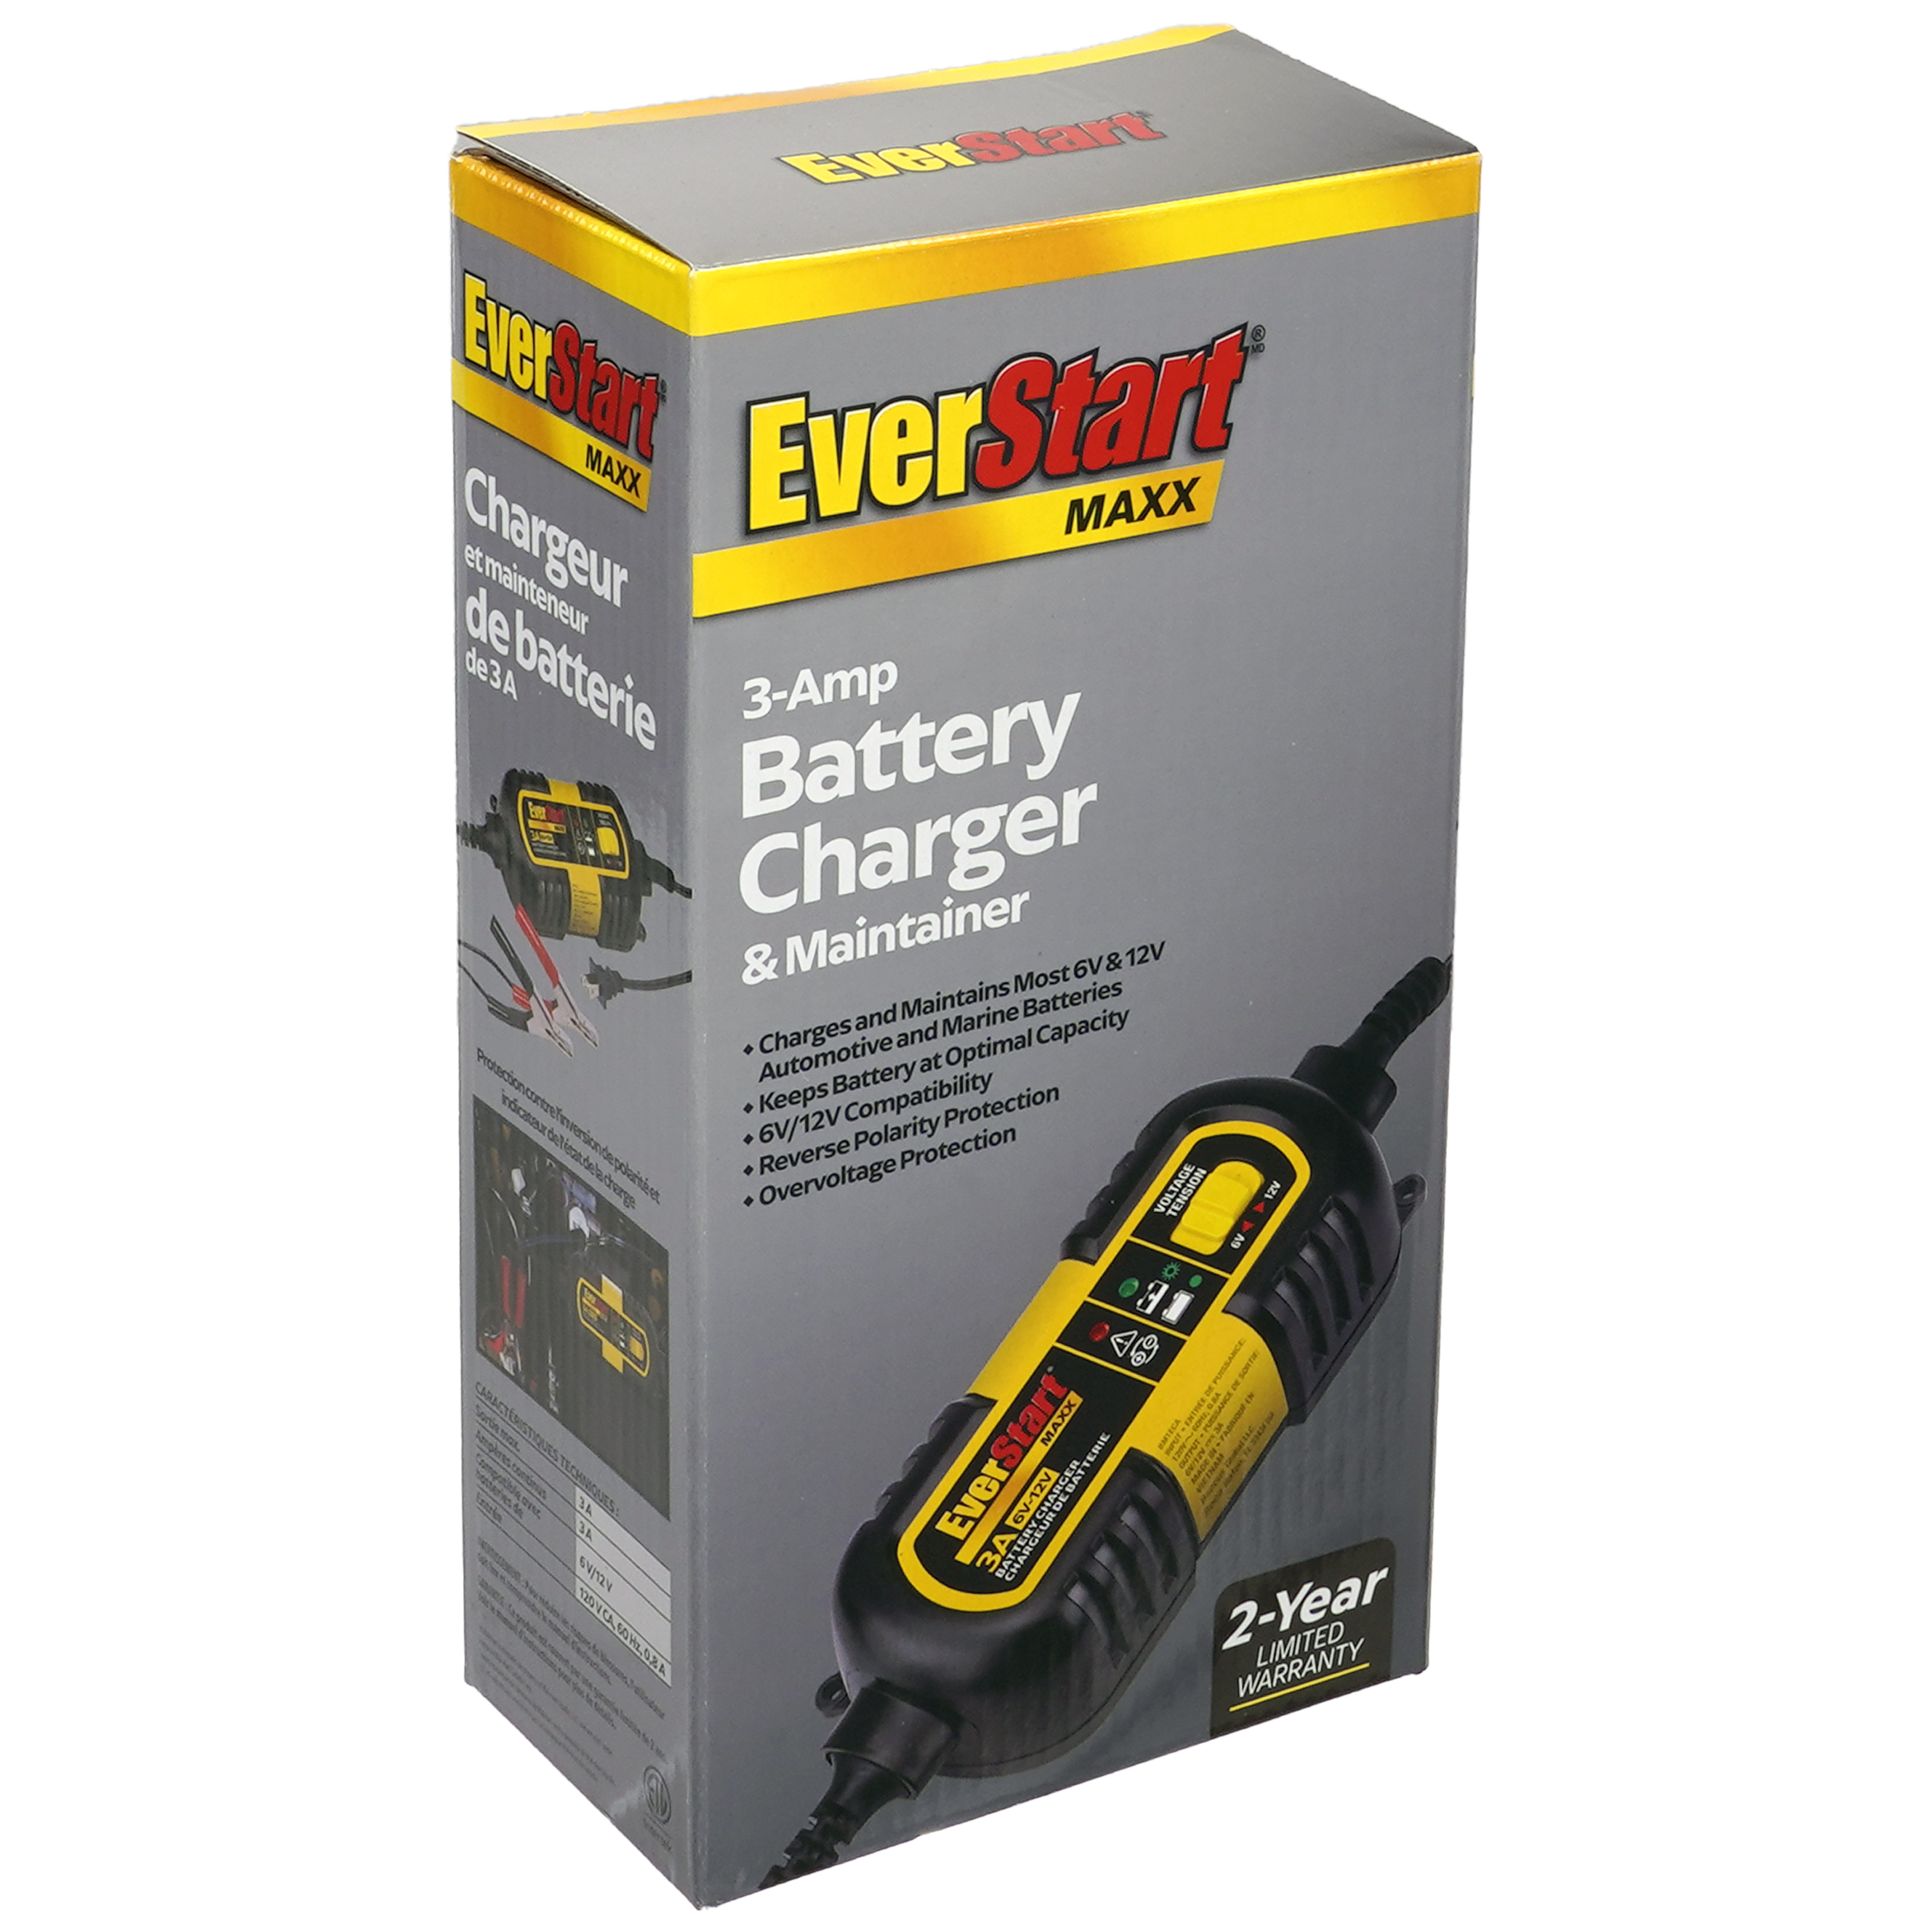 EverStart MAXX 3 Amp 6V/12V Automotive Battery Charger (BC3E) - New - image 3 of 7